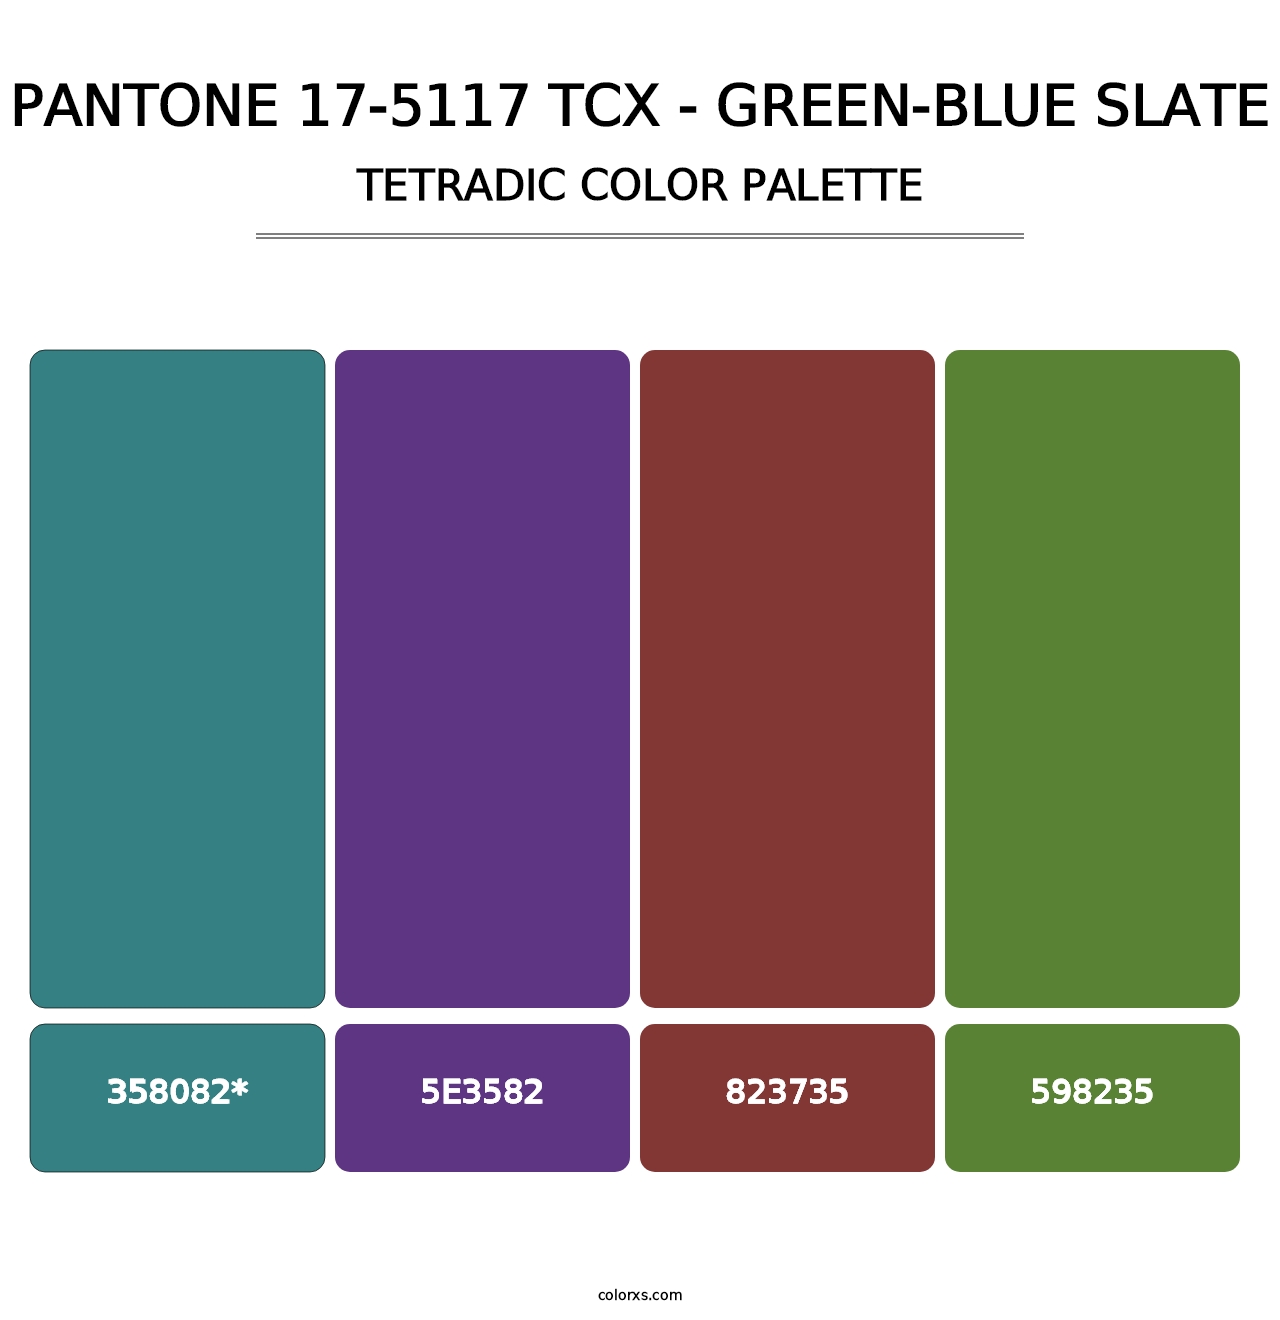 PANTONE 17-5117 TCX - Green-Blue Slate - Tetradic Color Palette